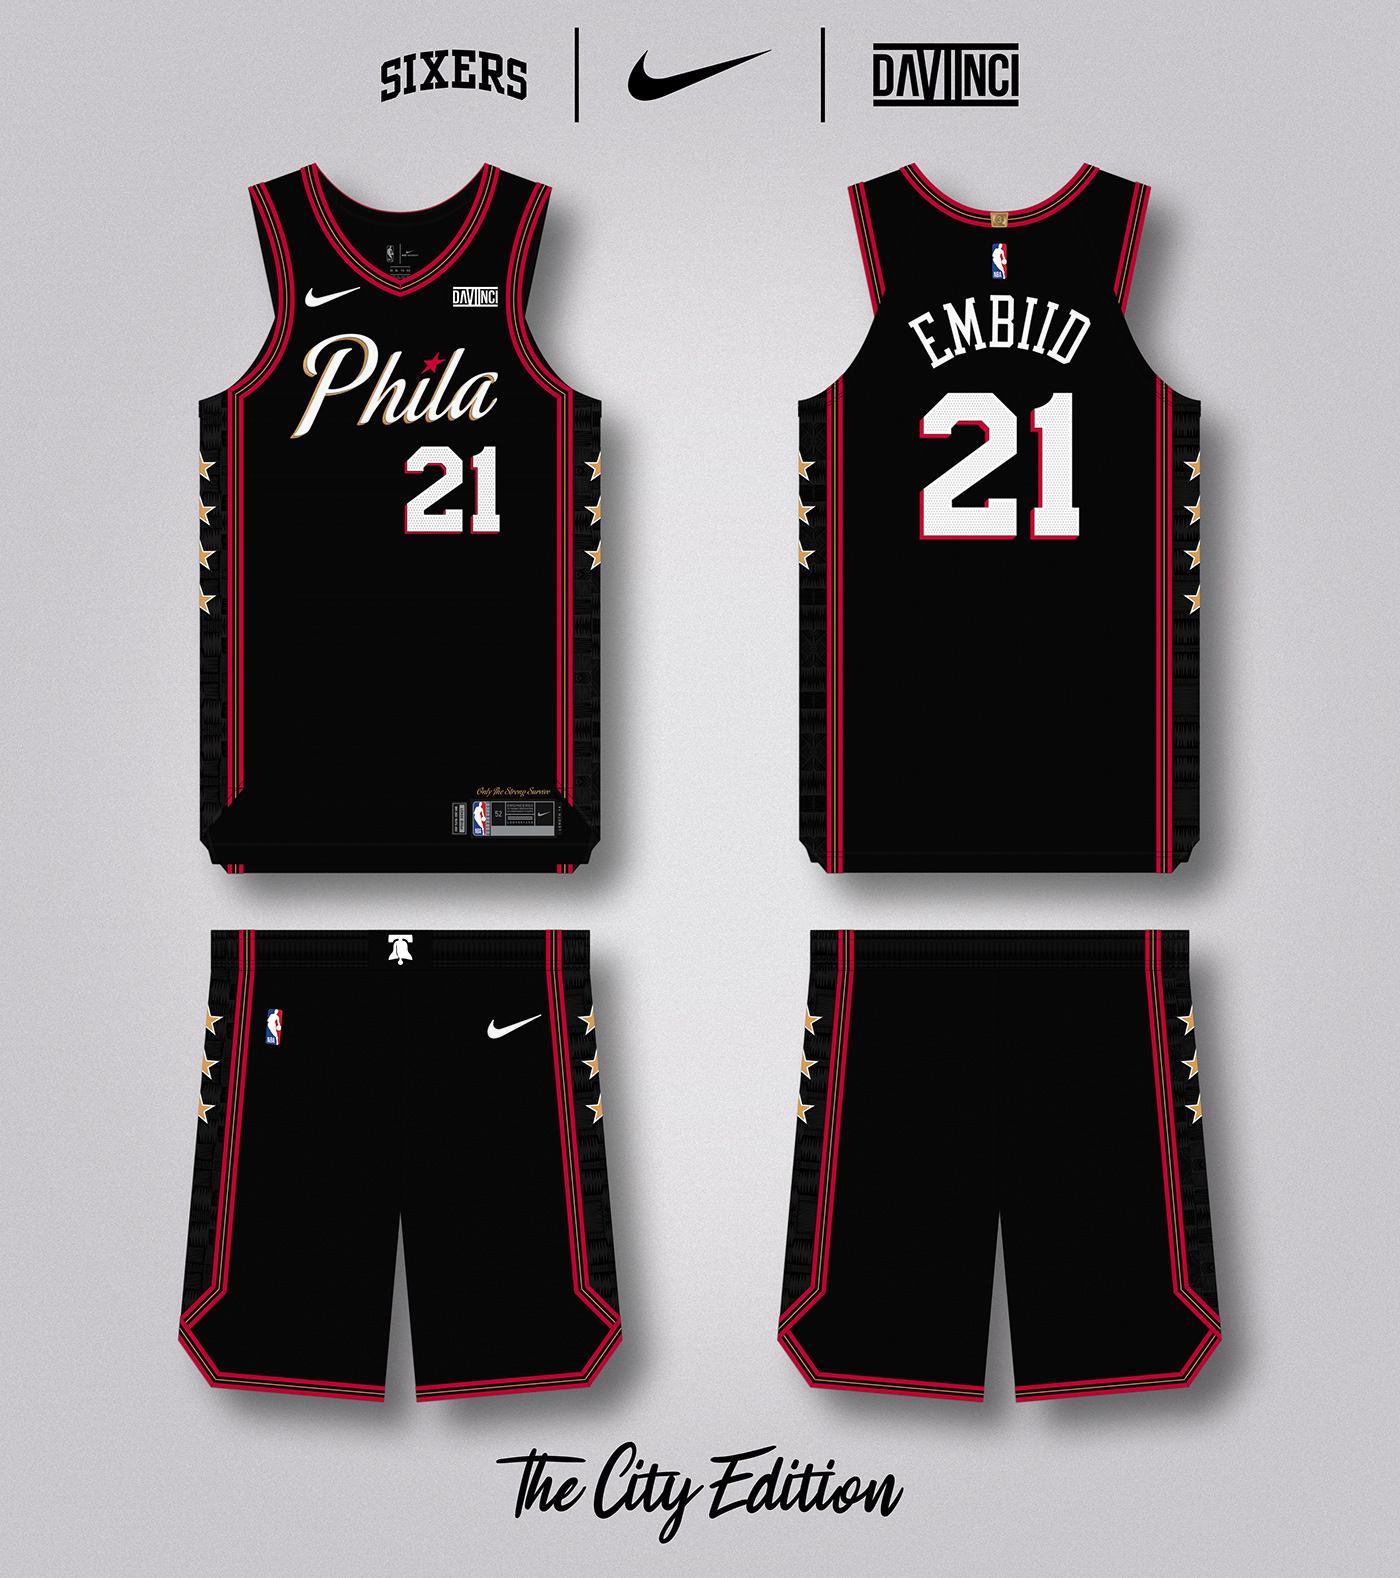 76ers basketball concept jersey NBA Nike philadelphia Sixers uniform